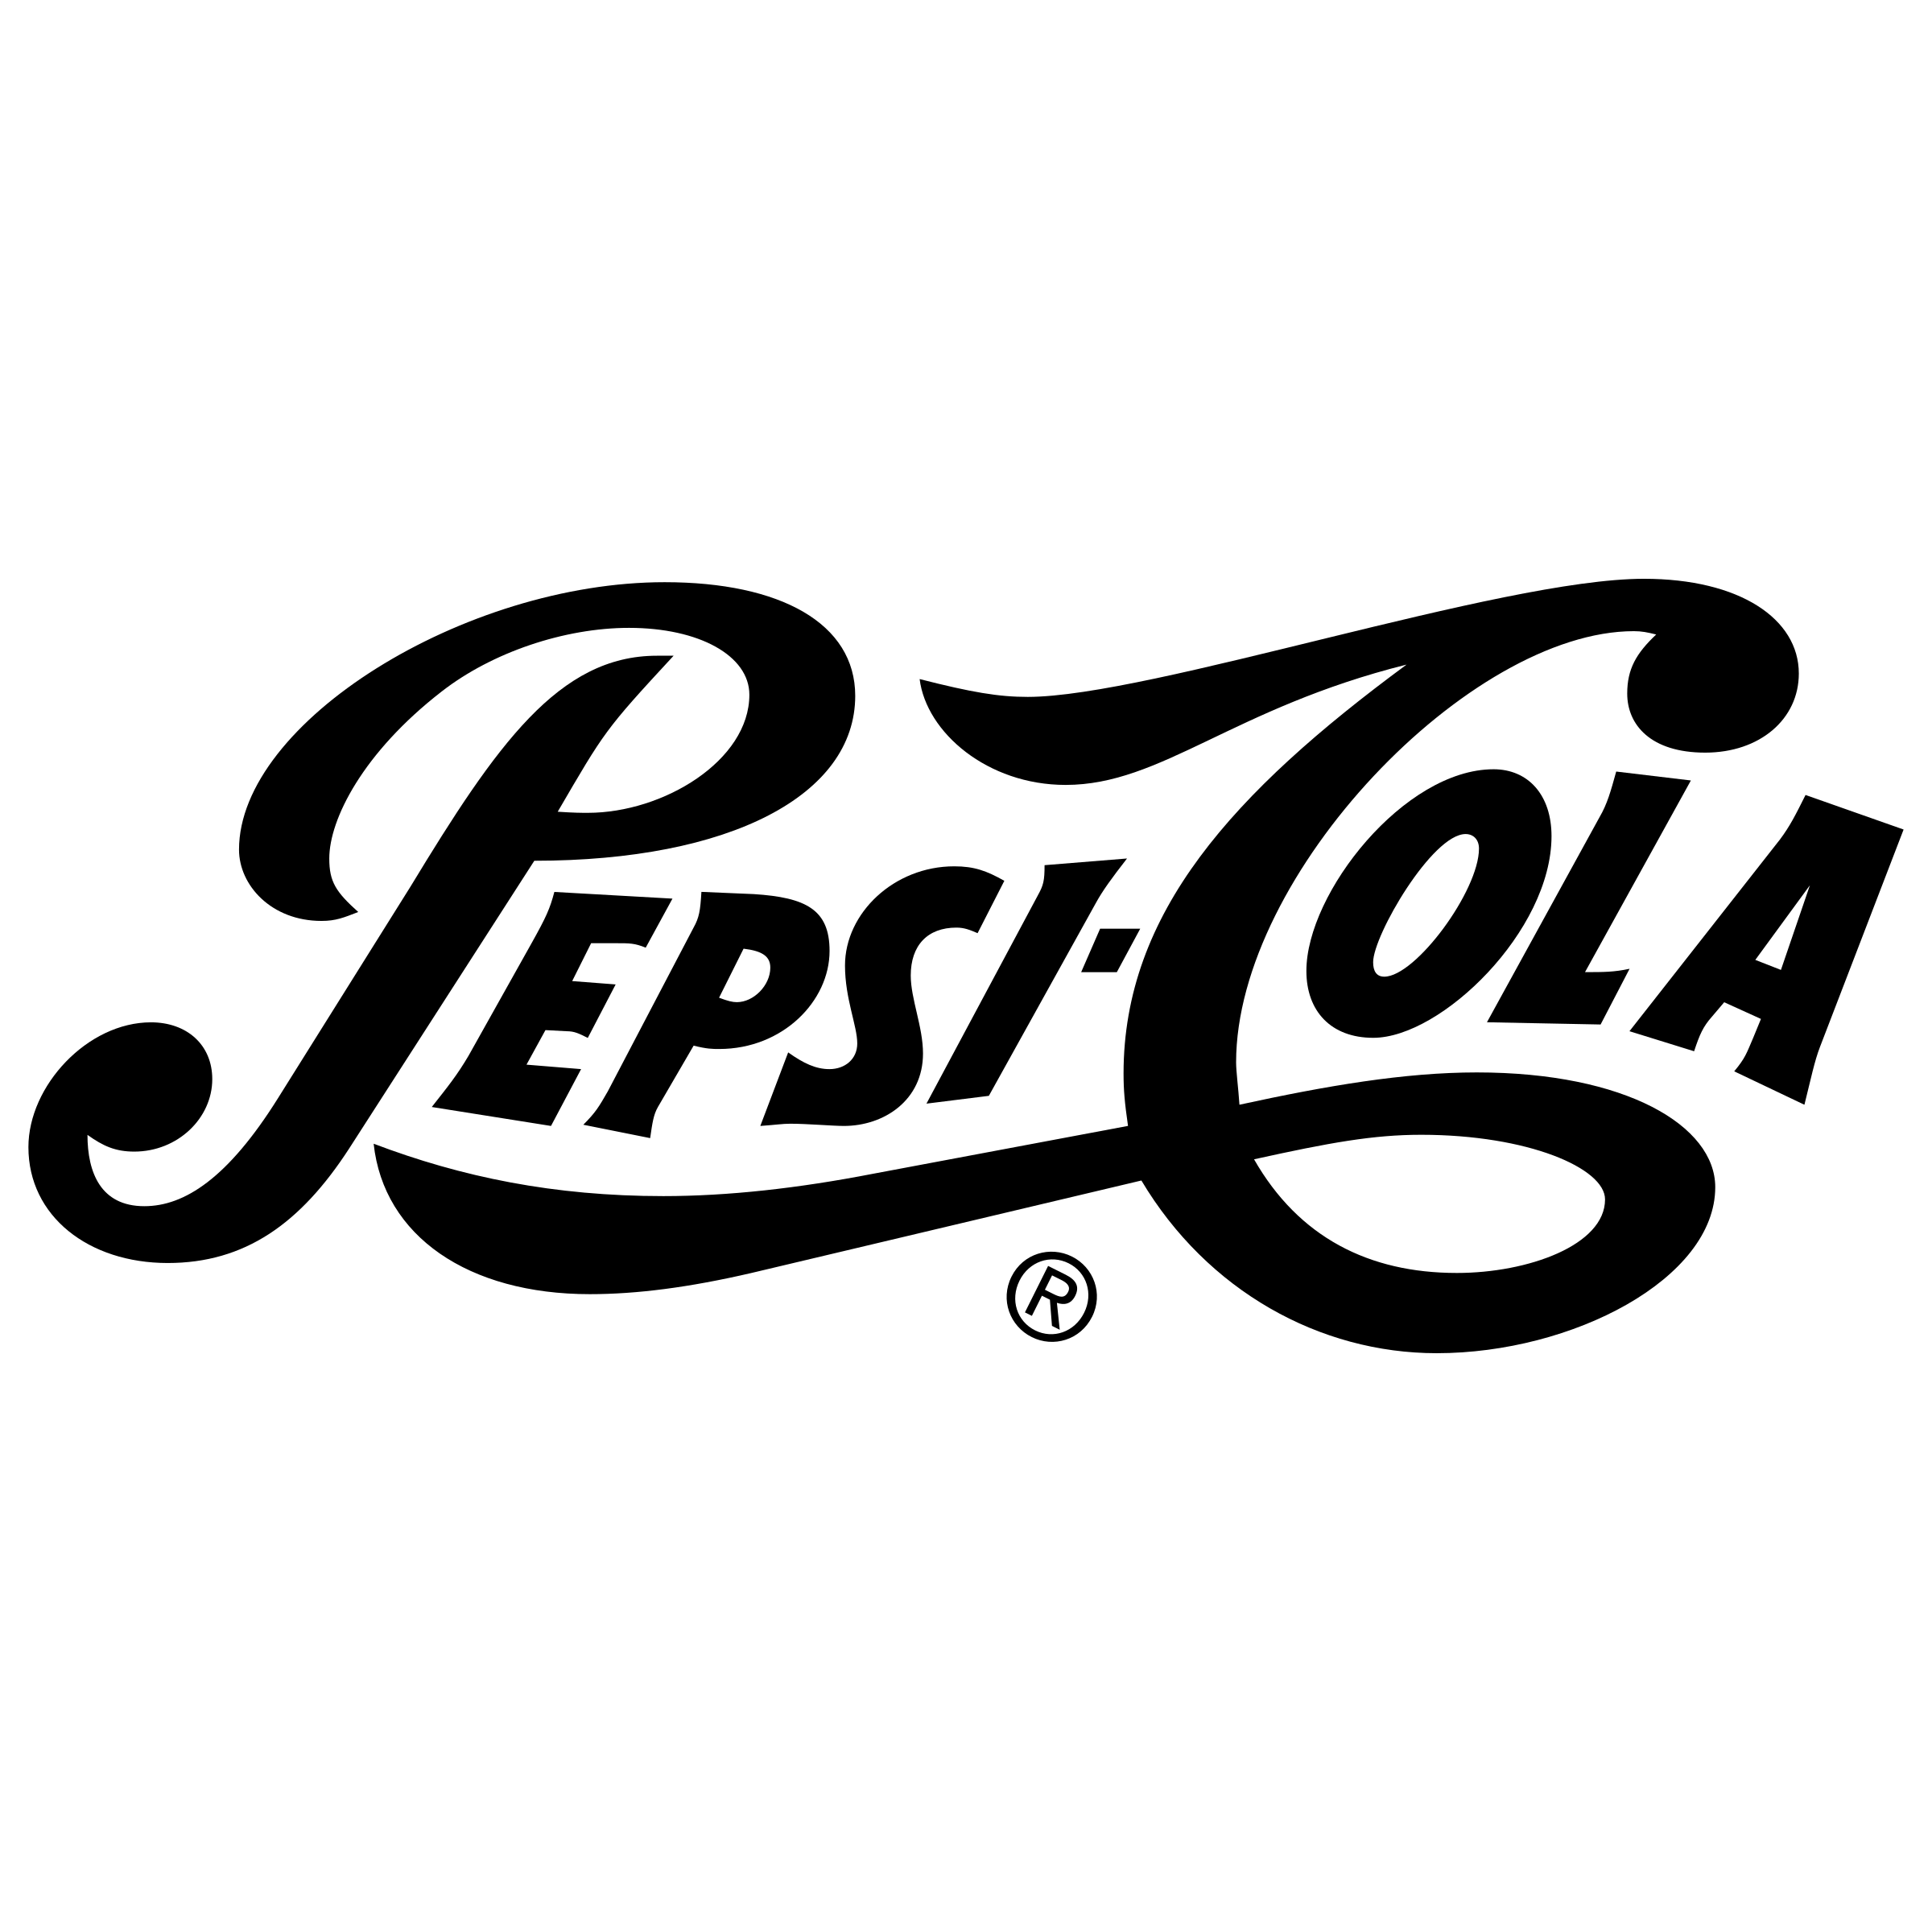 Pepsi Cola Logo - Pepsi Cola Logo PNG Transparent & SVG Vector - Freebie Supply